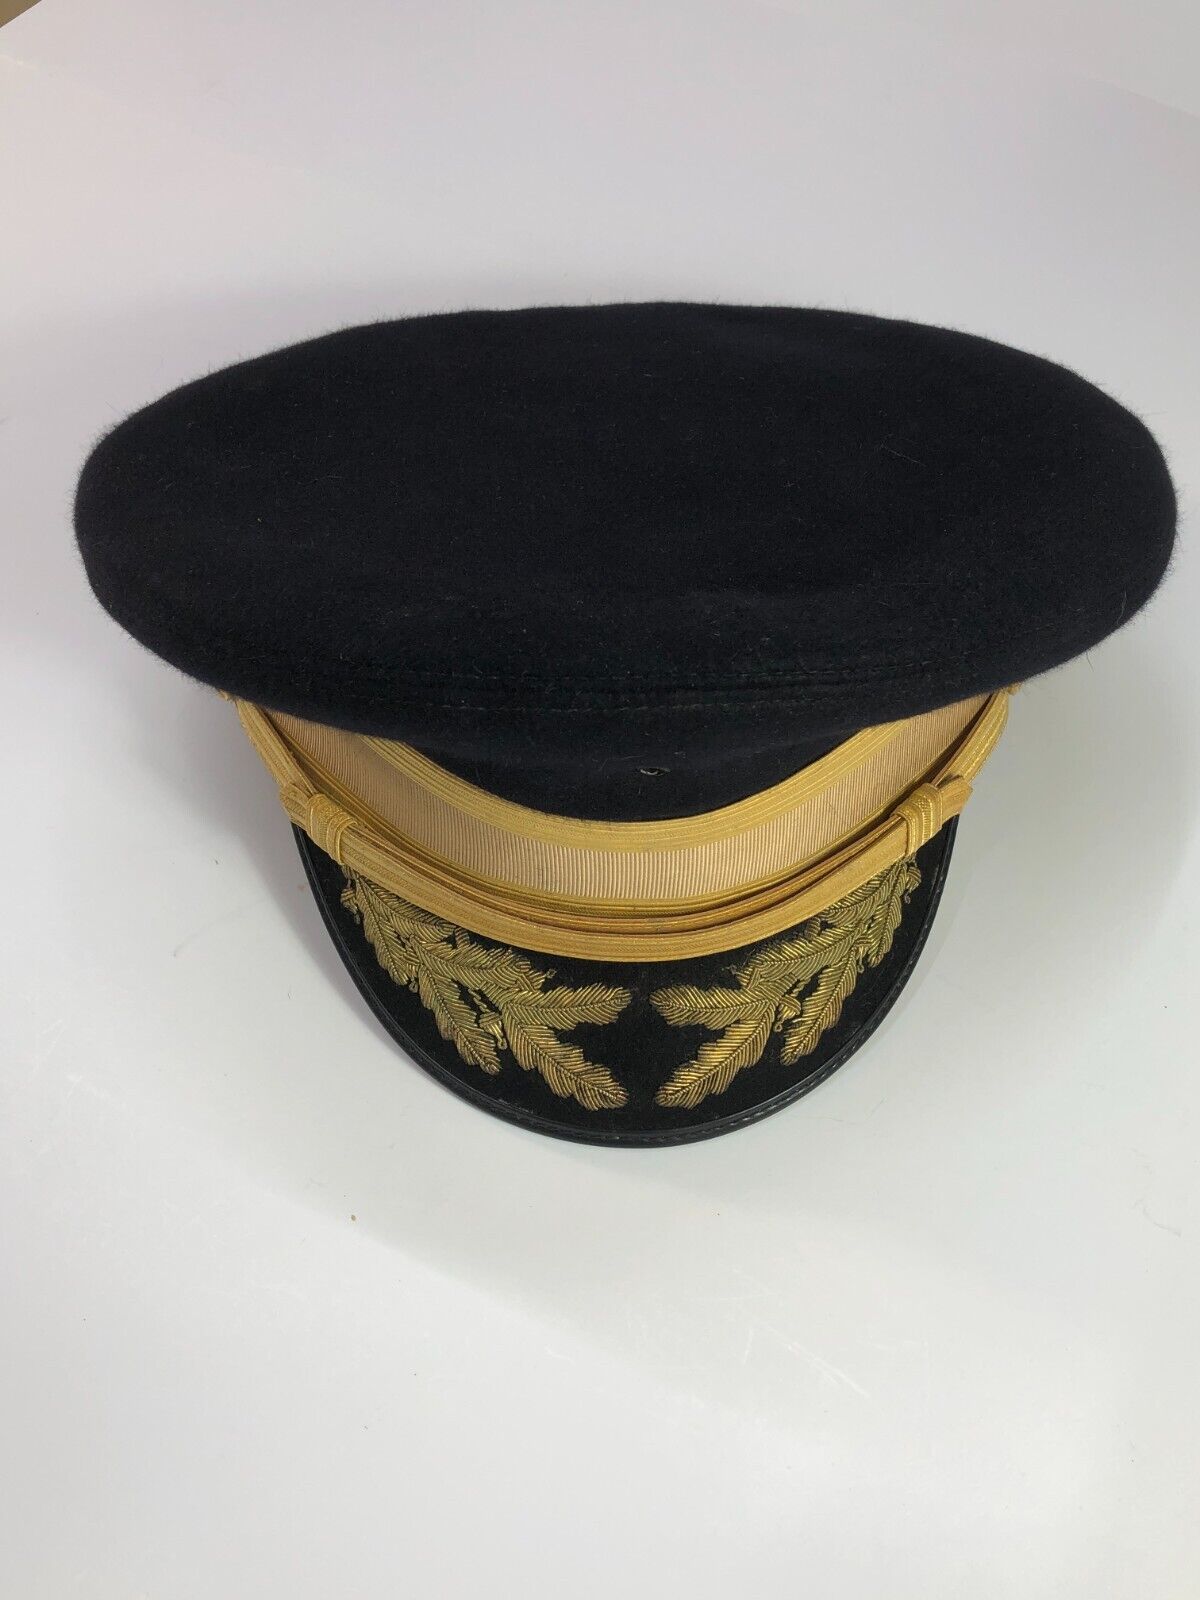 Vintage US Army Dress Hat Art Caps Military Headwear